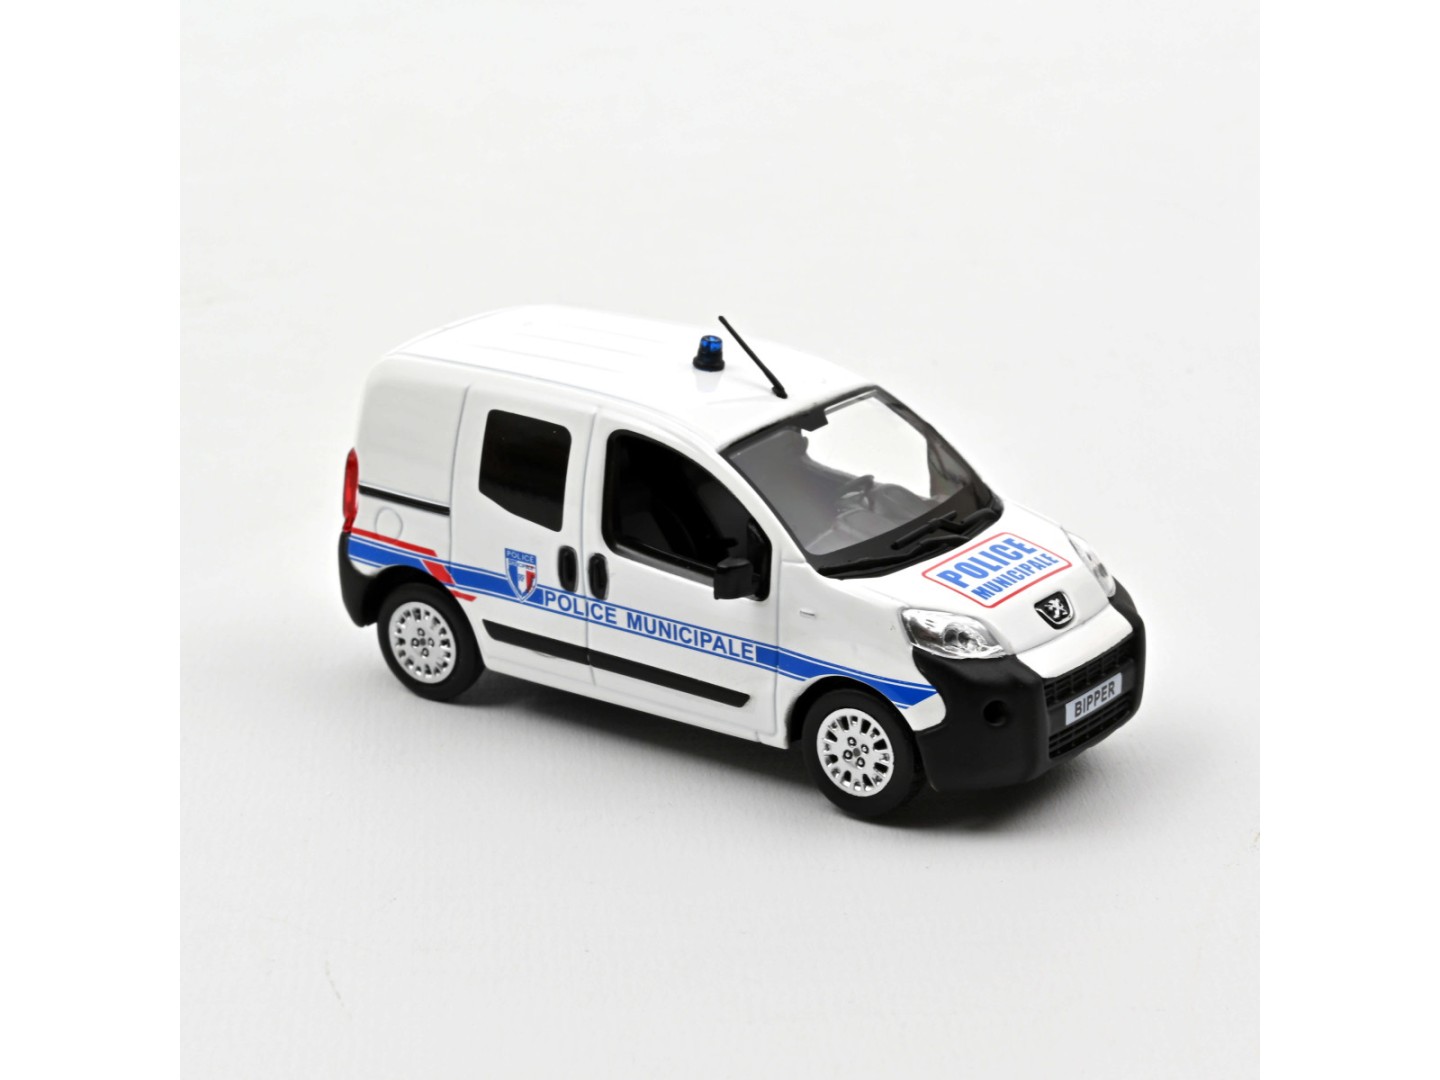 Marketplace - Peugeot Bipper 2009 Police Municipale - Norev - 1:43